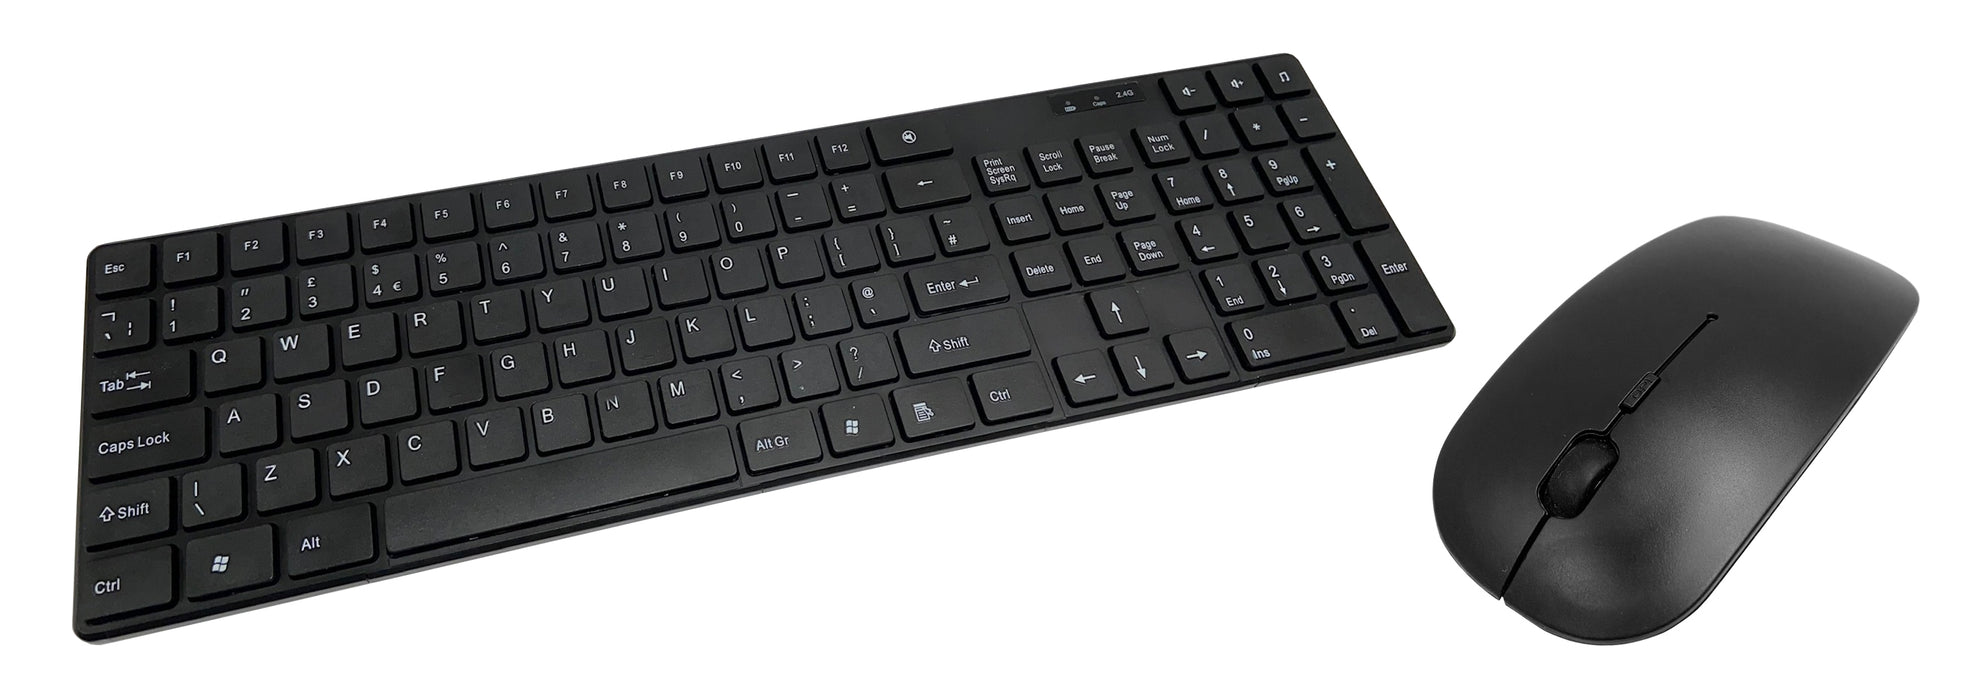 High Quality Wireless Keyboard & Mouse Desktop Combo - Black - KB-RF-888